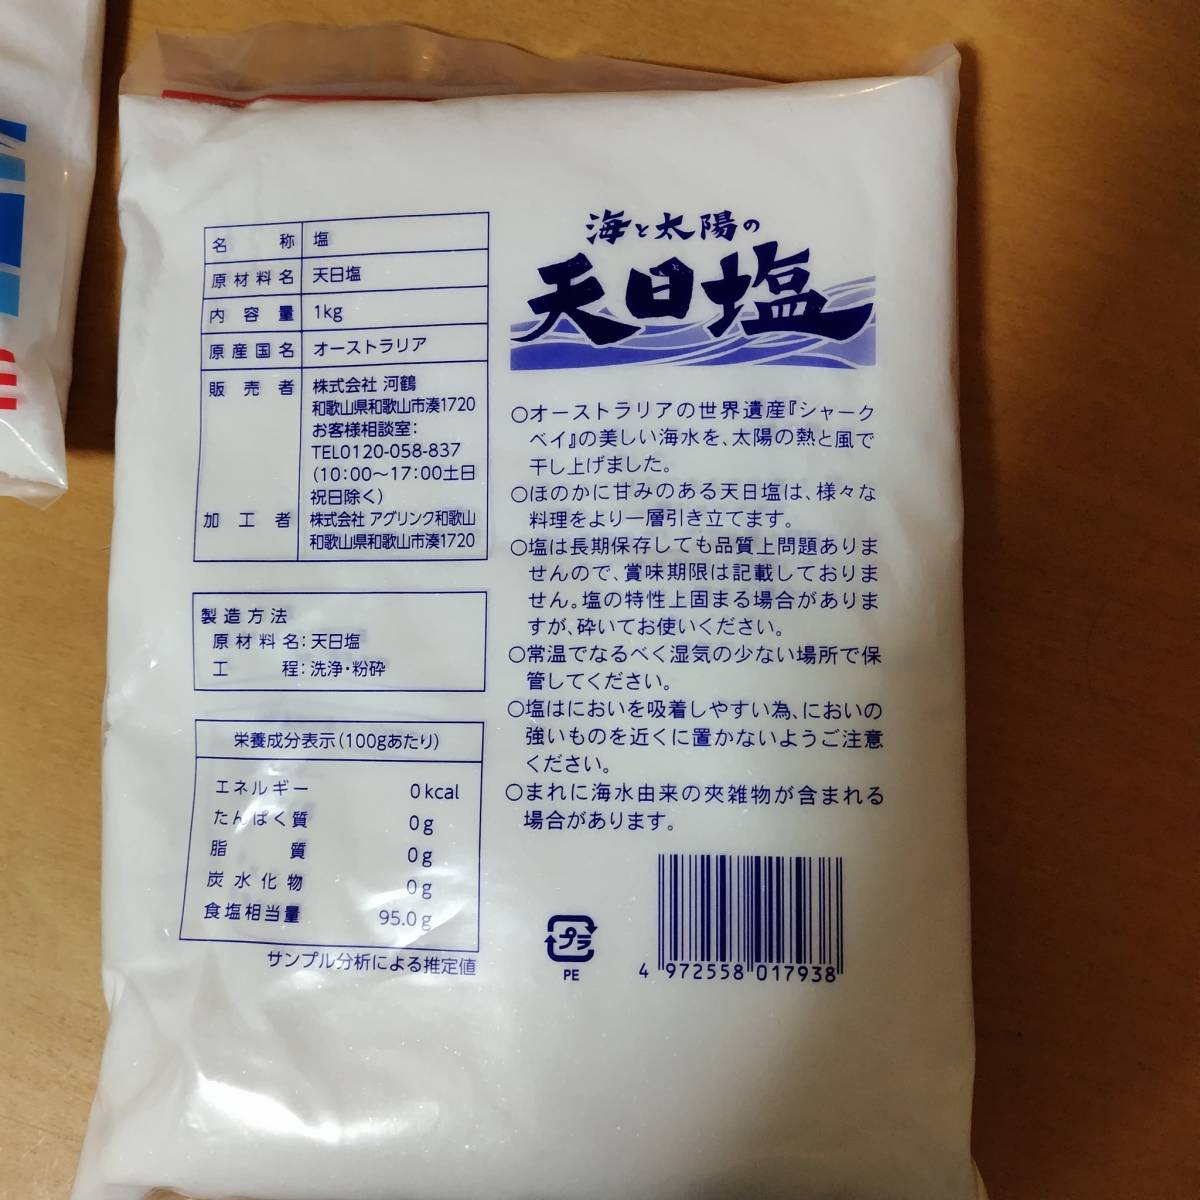 [ natural salt ] sea . sun. heaven day salt 3 kilogram!! 1kg×3 sack 